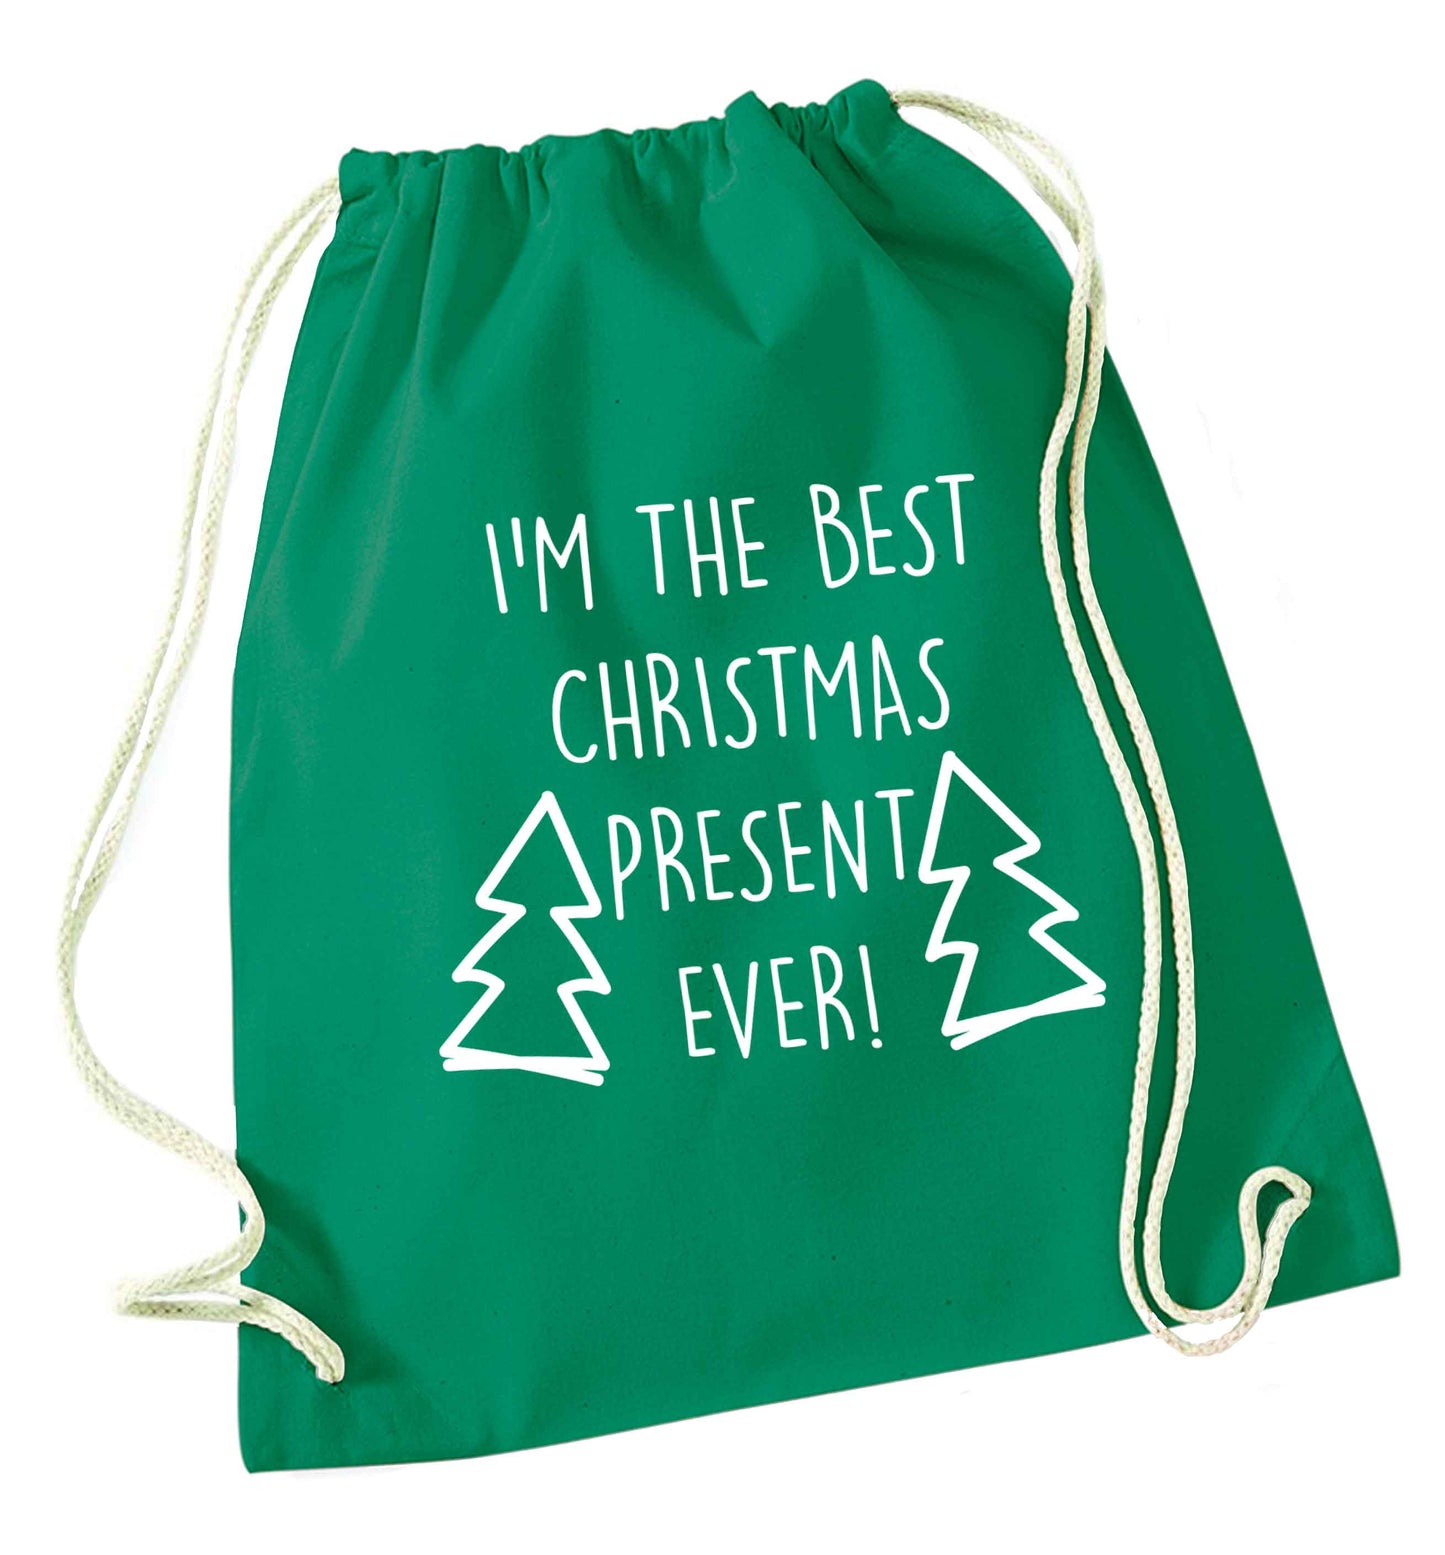 I'm the best Christmas present ever green drawstring bag